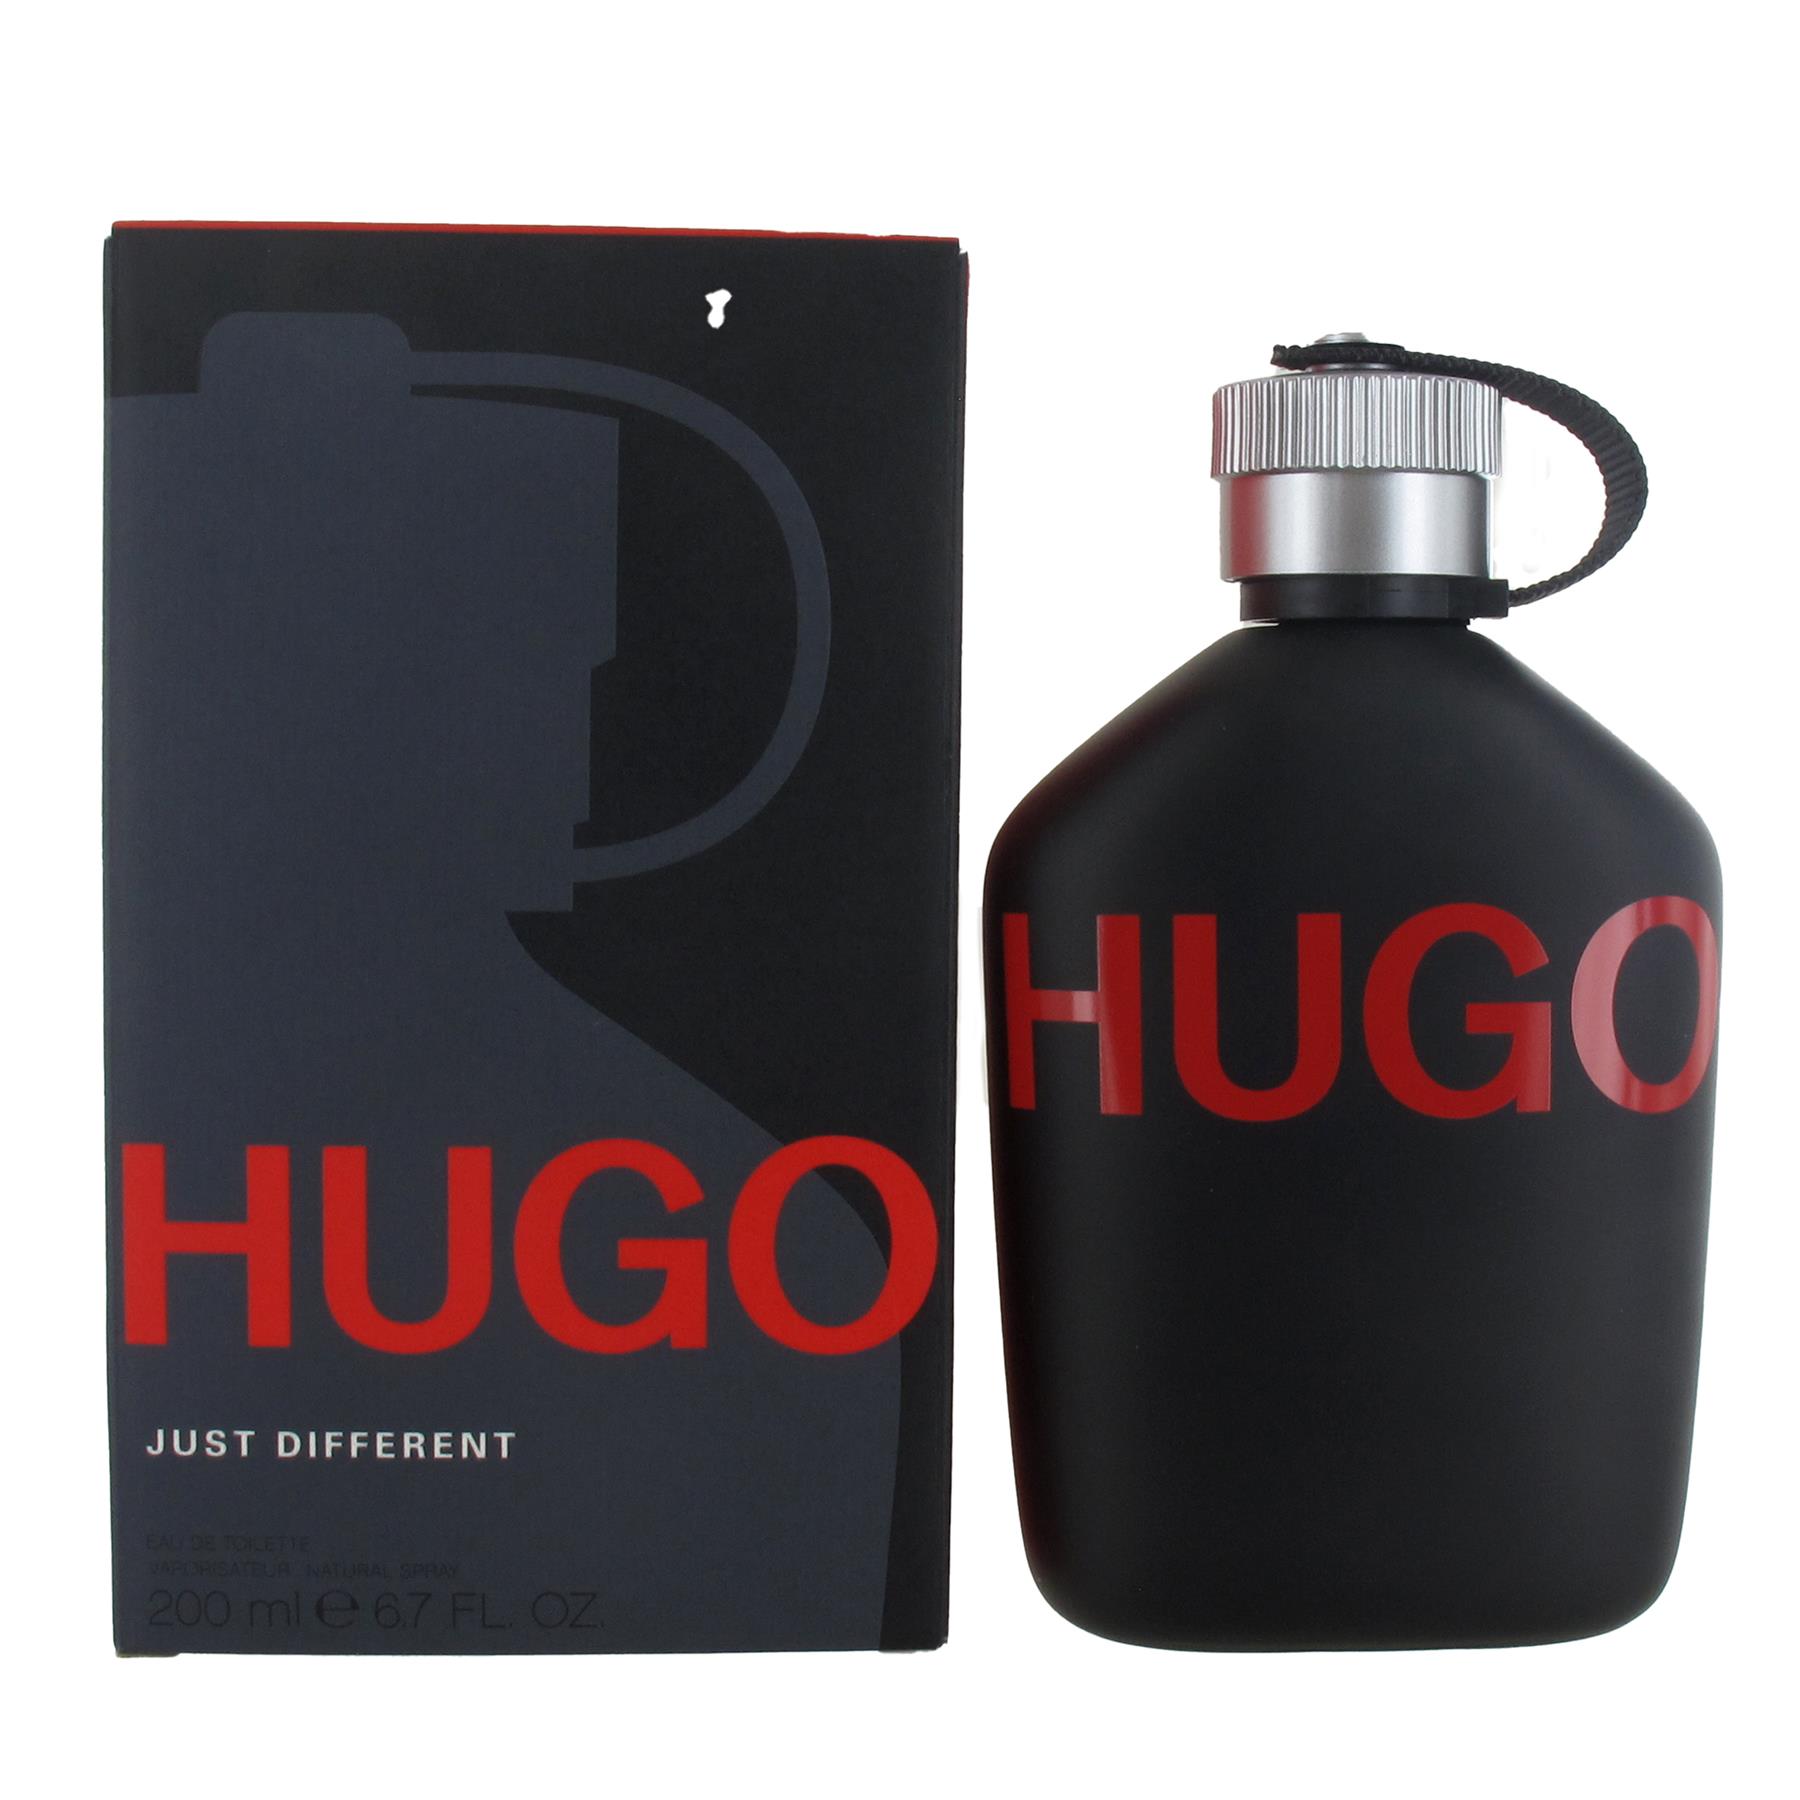 Hugo Boss Hugo Just Different 200ml Eau de Toilette Spray for Him from Perfume Plus Direct